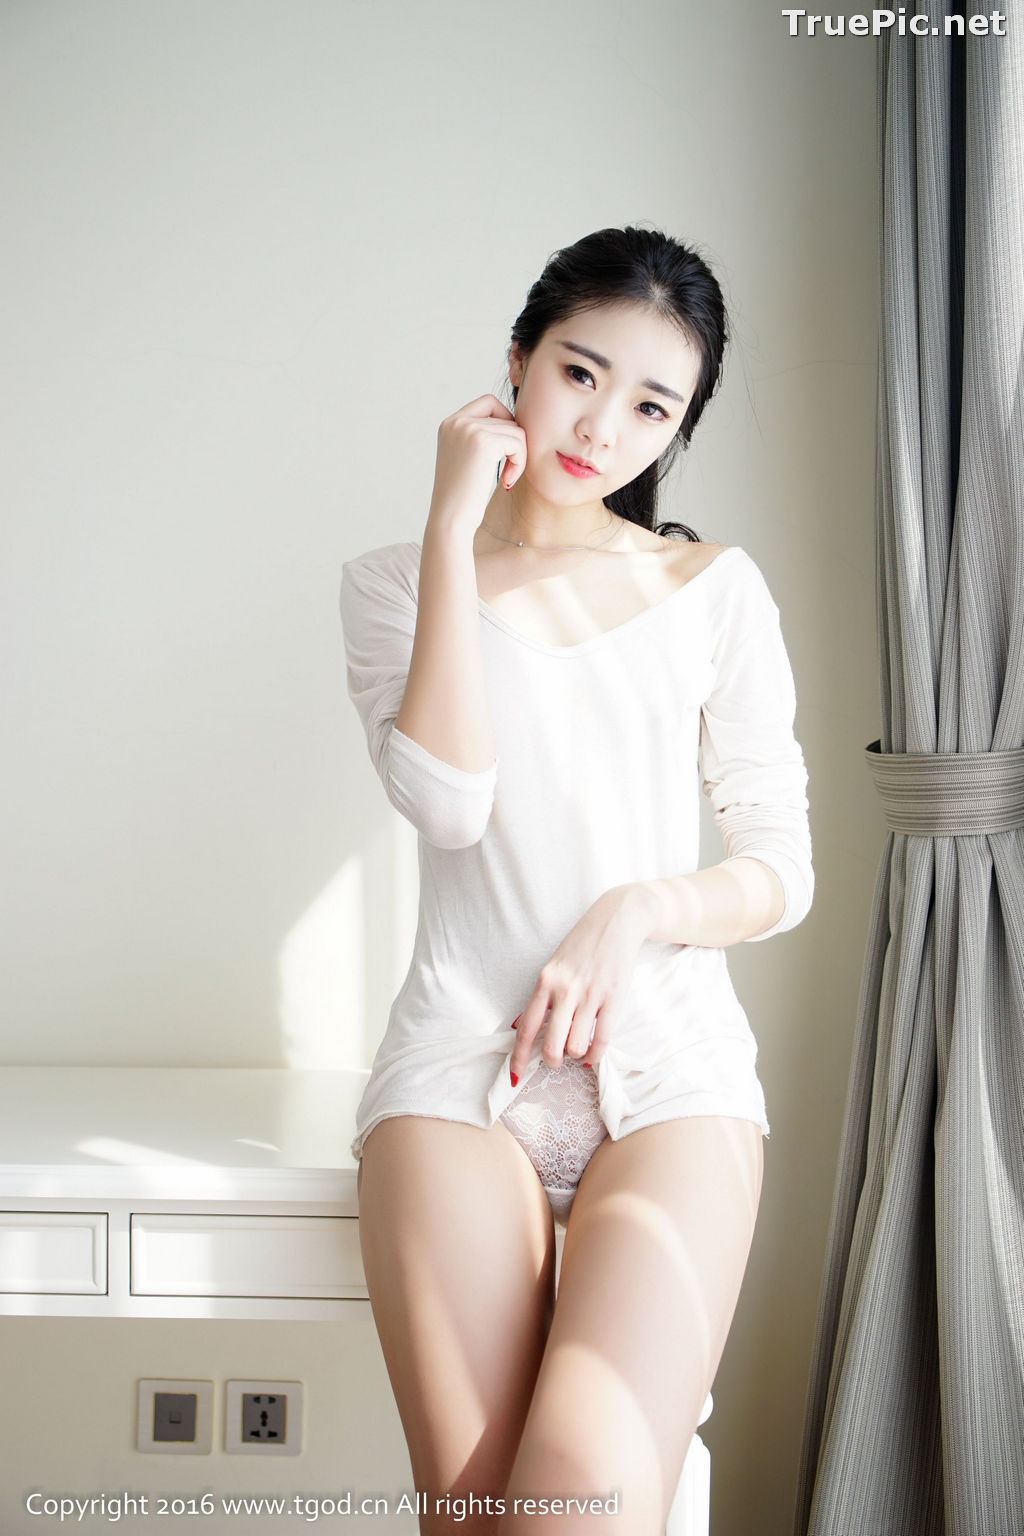 Image TGOD Photo Album - Chinese Beautiful Model - Ke Le Vicky (可乐Vicky) - TruePic.net - Picture-15